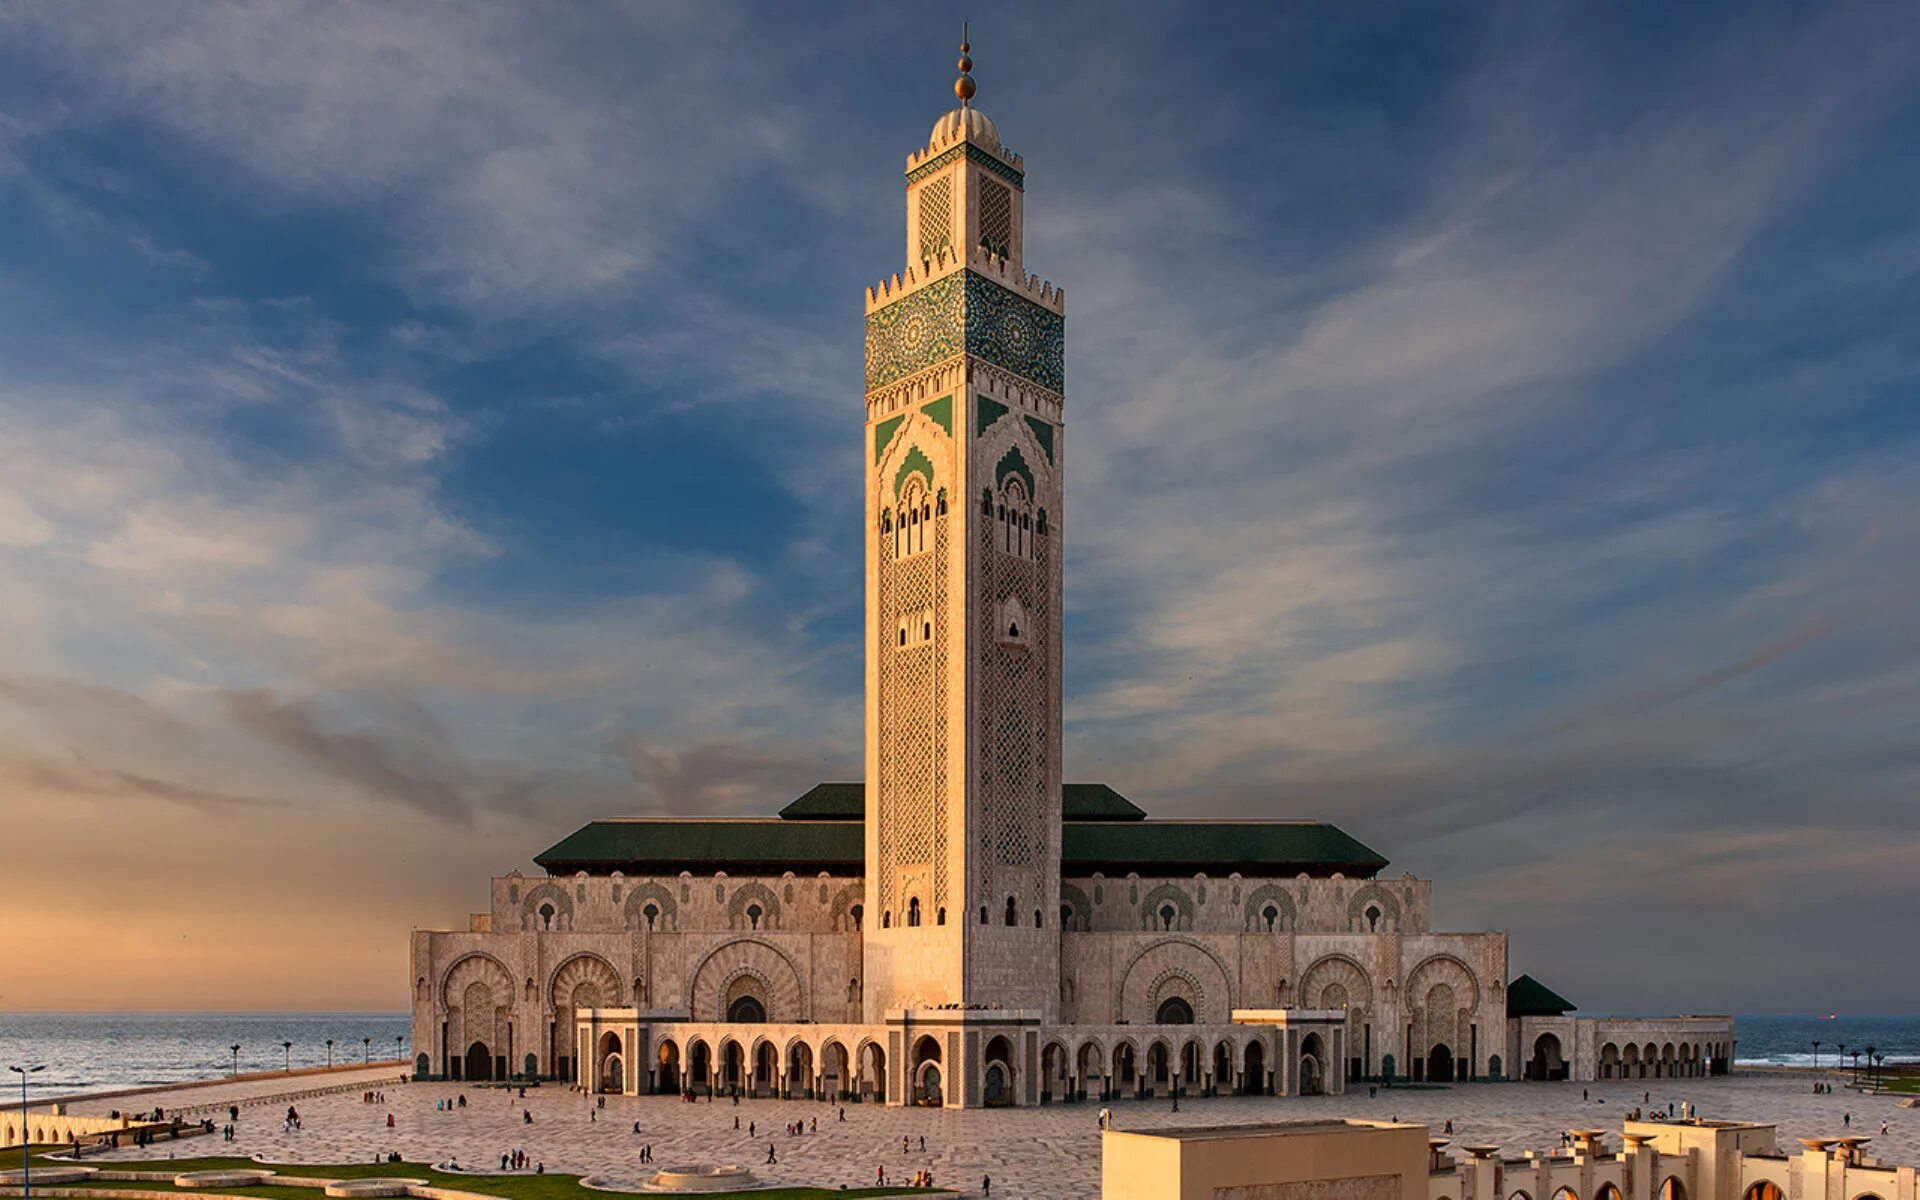 Великая мечеть Хассана II, Касабланка. Мечеть Хасана 2 в Марокко. Касабланка Марокко мечеть Хасана. 4. Великая мечеть Хассана II, Касабланка (Марокко). Касабланка 2